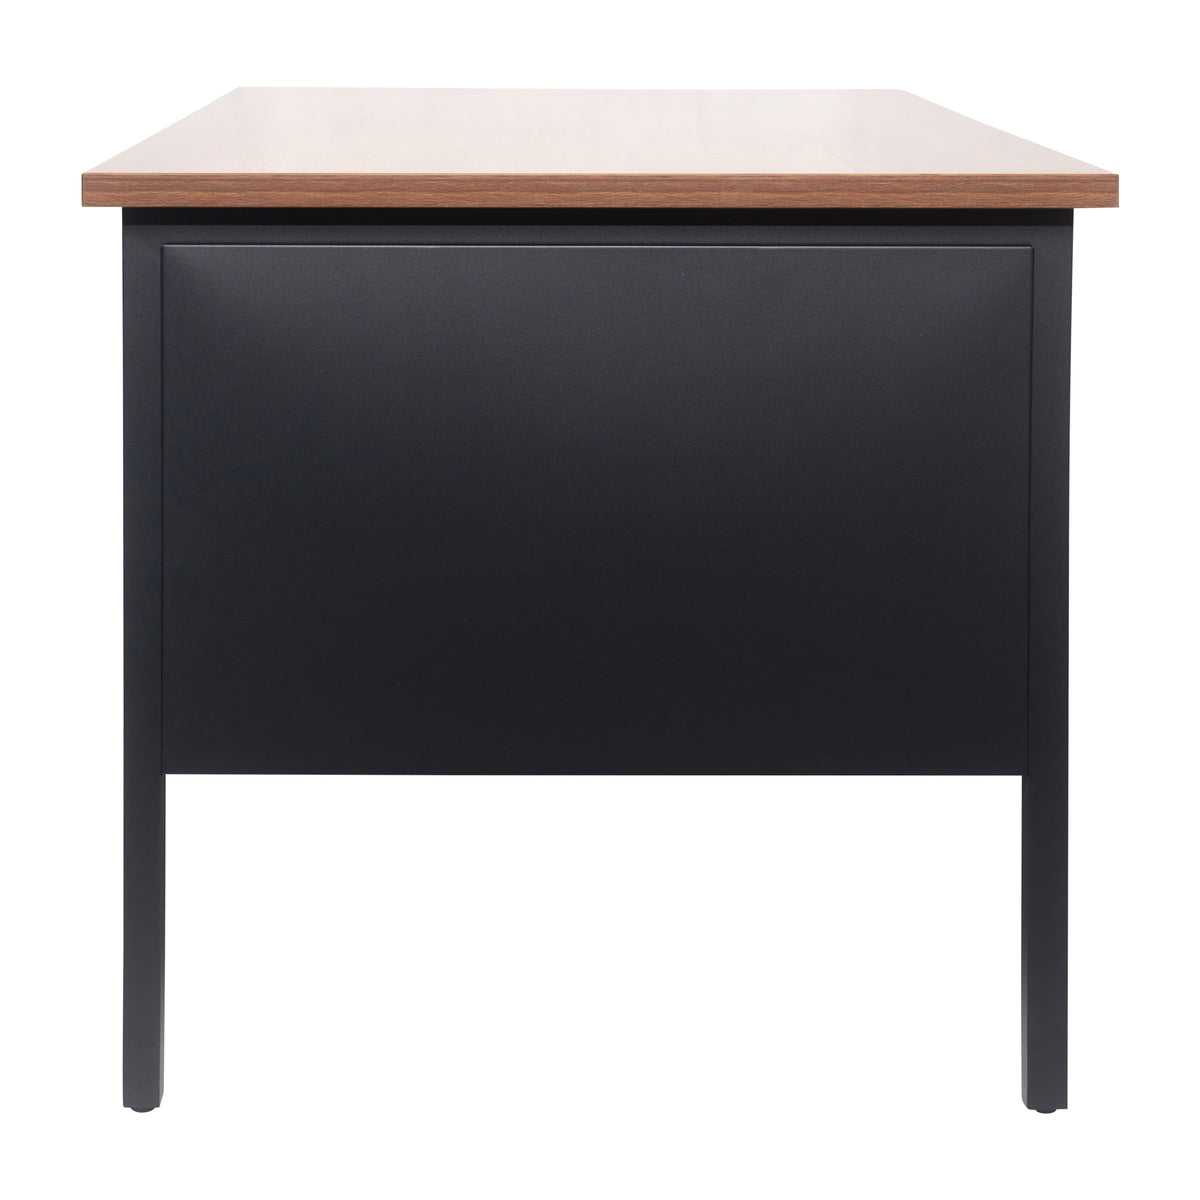 Walnut |#| Commercial Right Side Single Pedestal Desk-3 Locking Drawers in Walnut-30x60